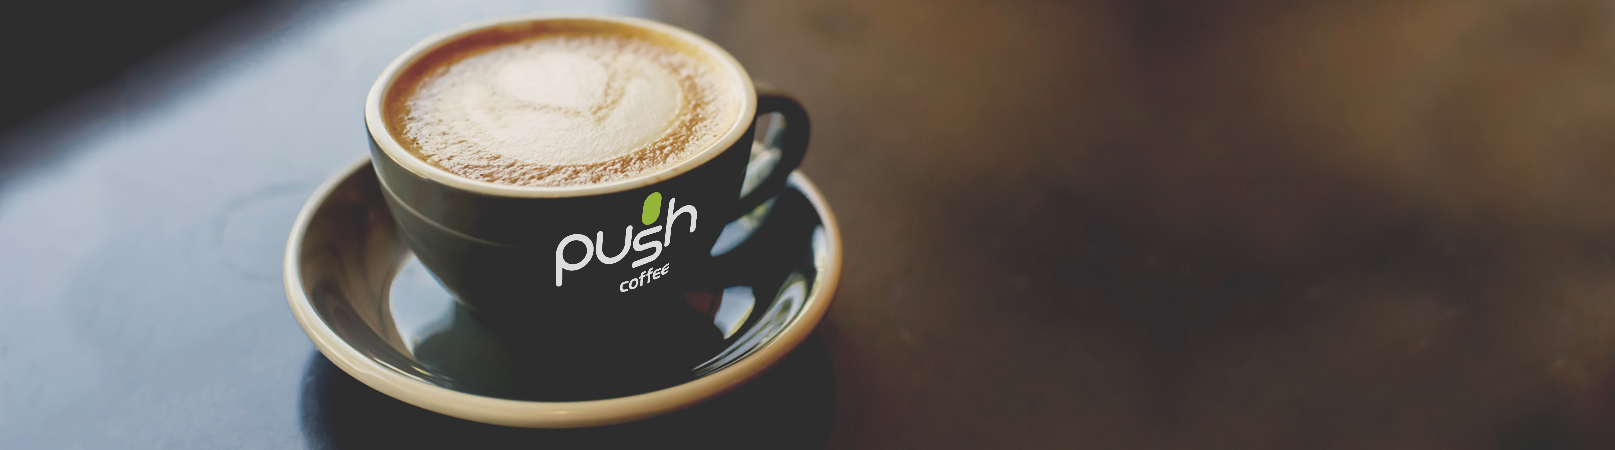 Push Coffee